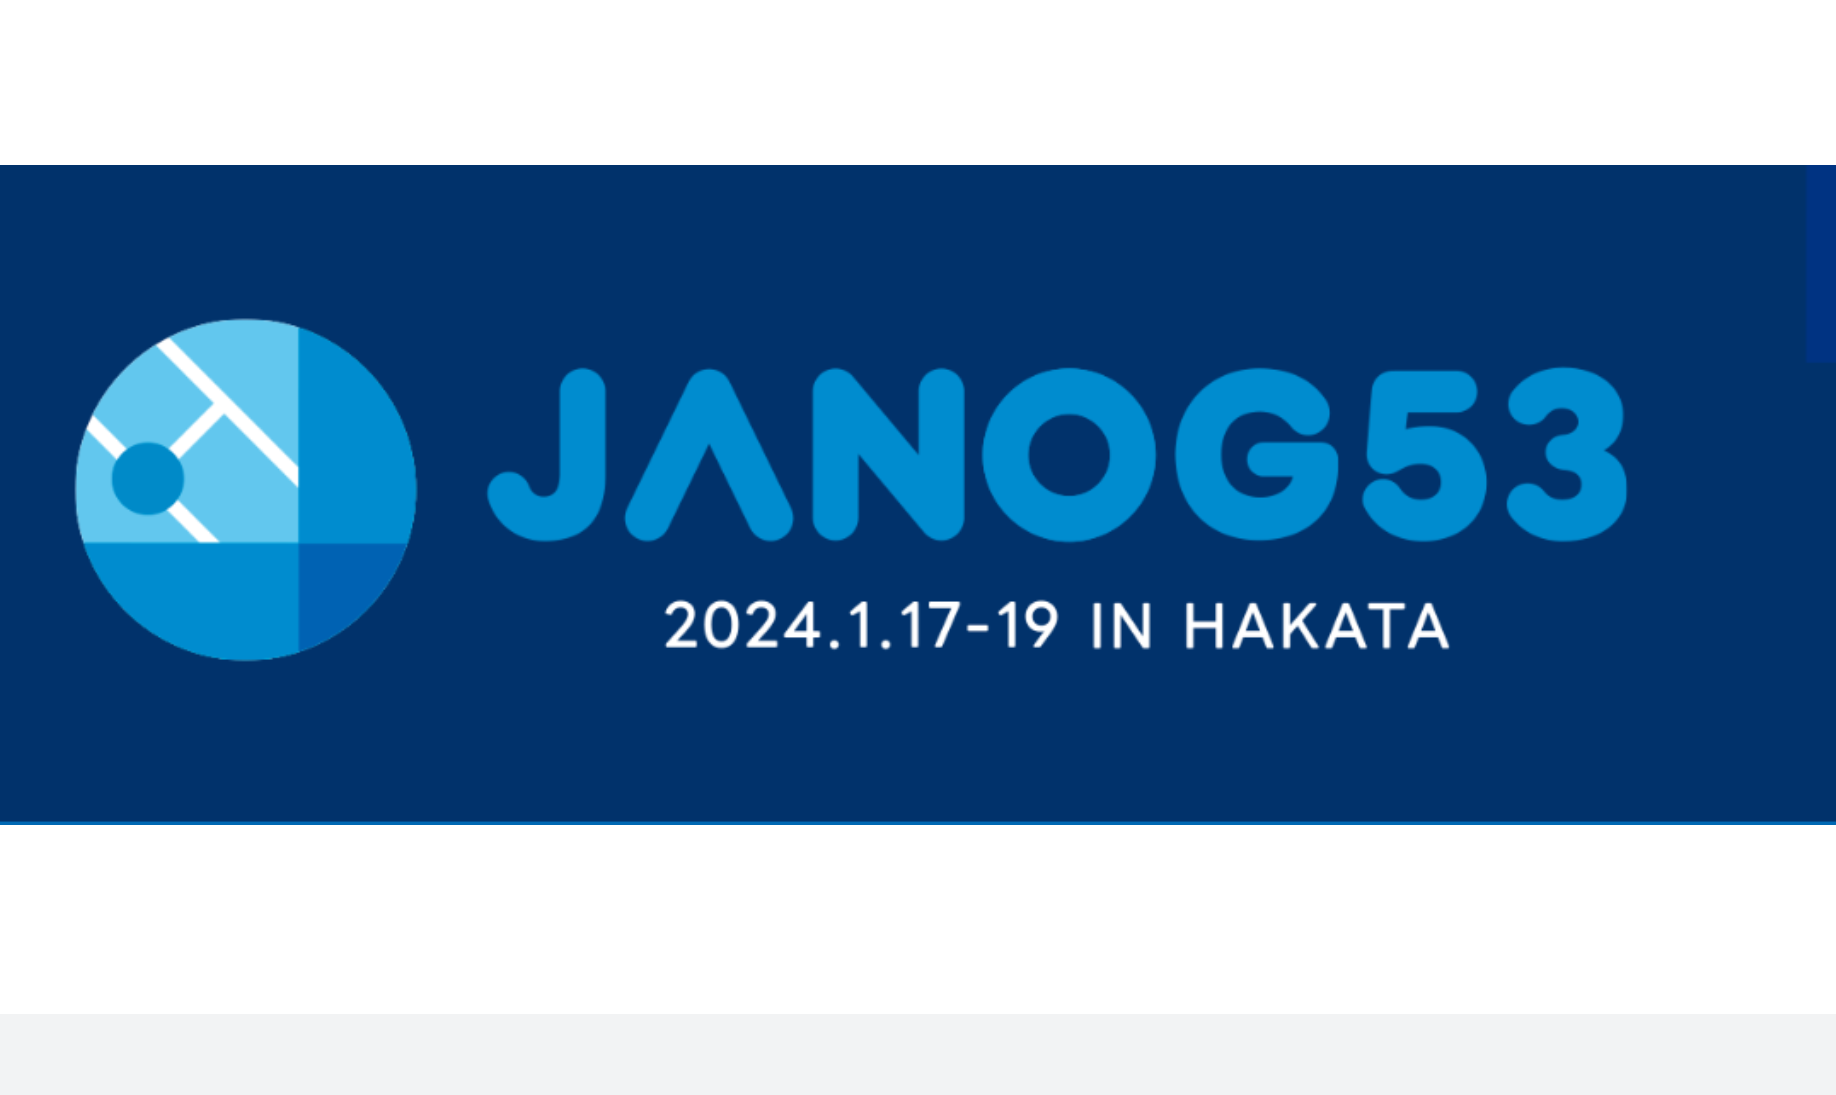 JANOG53 Meeting in Hakata 出展レポート